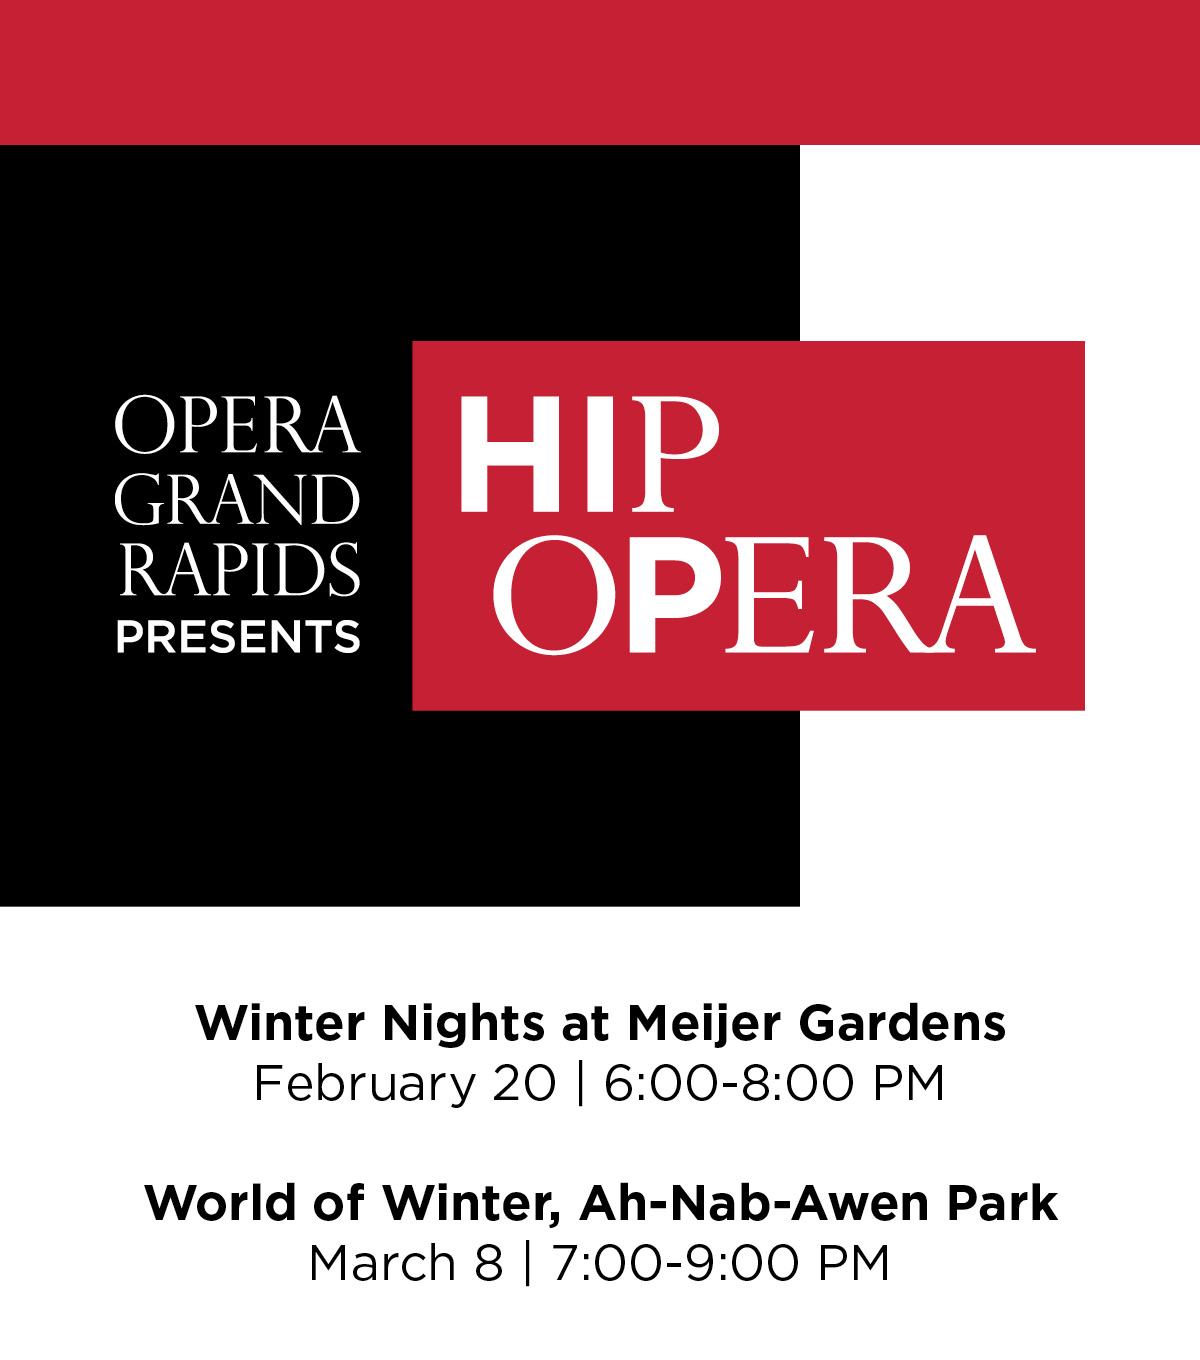 Opera Grand Rapids presents Hip Opera | Winter Nights at Meijer Gardens, February 20, 6:00-8:00 PM | World of Winter, Ah-Nab-Awen Park, March 8, 7:00-9:00 PM